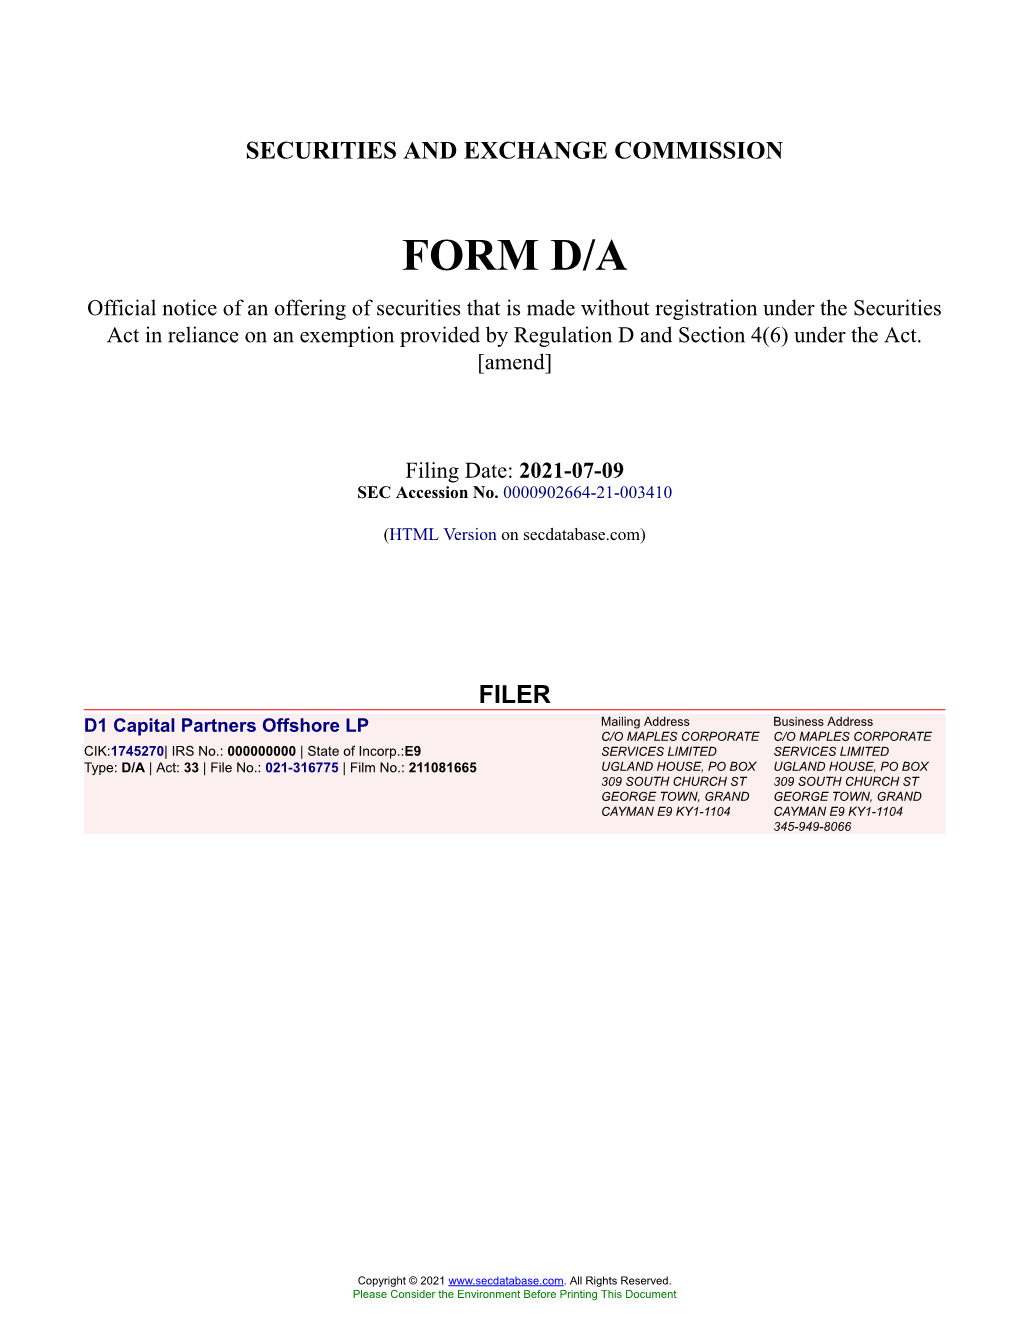 D1 Capital Partners Offshore LP Form D/A Filed 2021-07-09